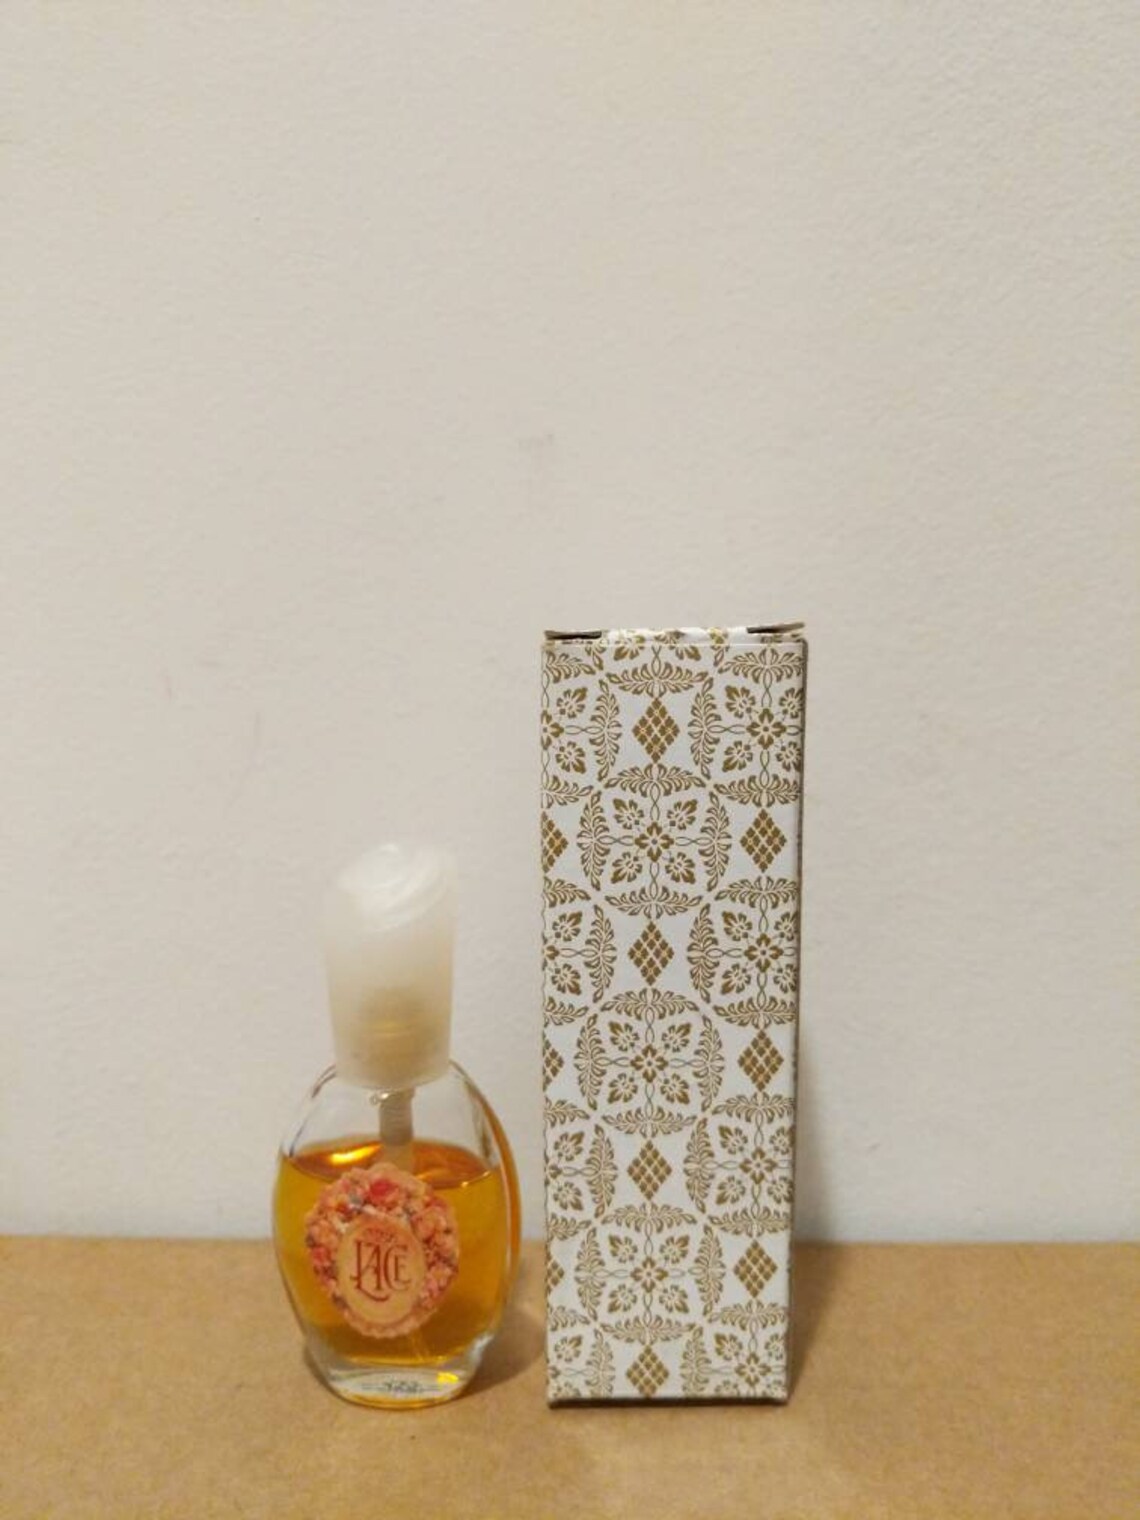 TRULY LACE by Coty Eau De Parfum Spray .5 Oz. EDP Perfume Hard to Find ...